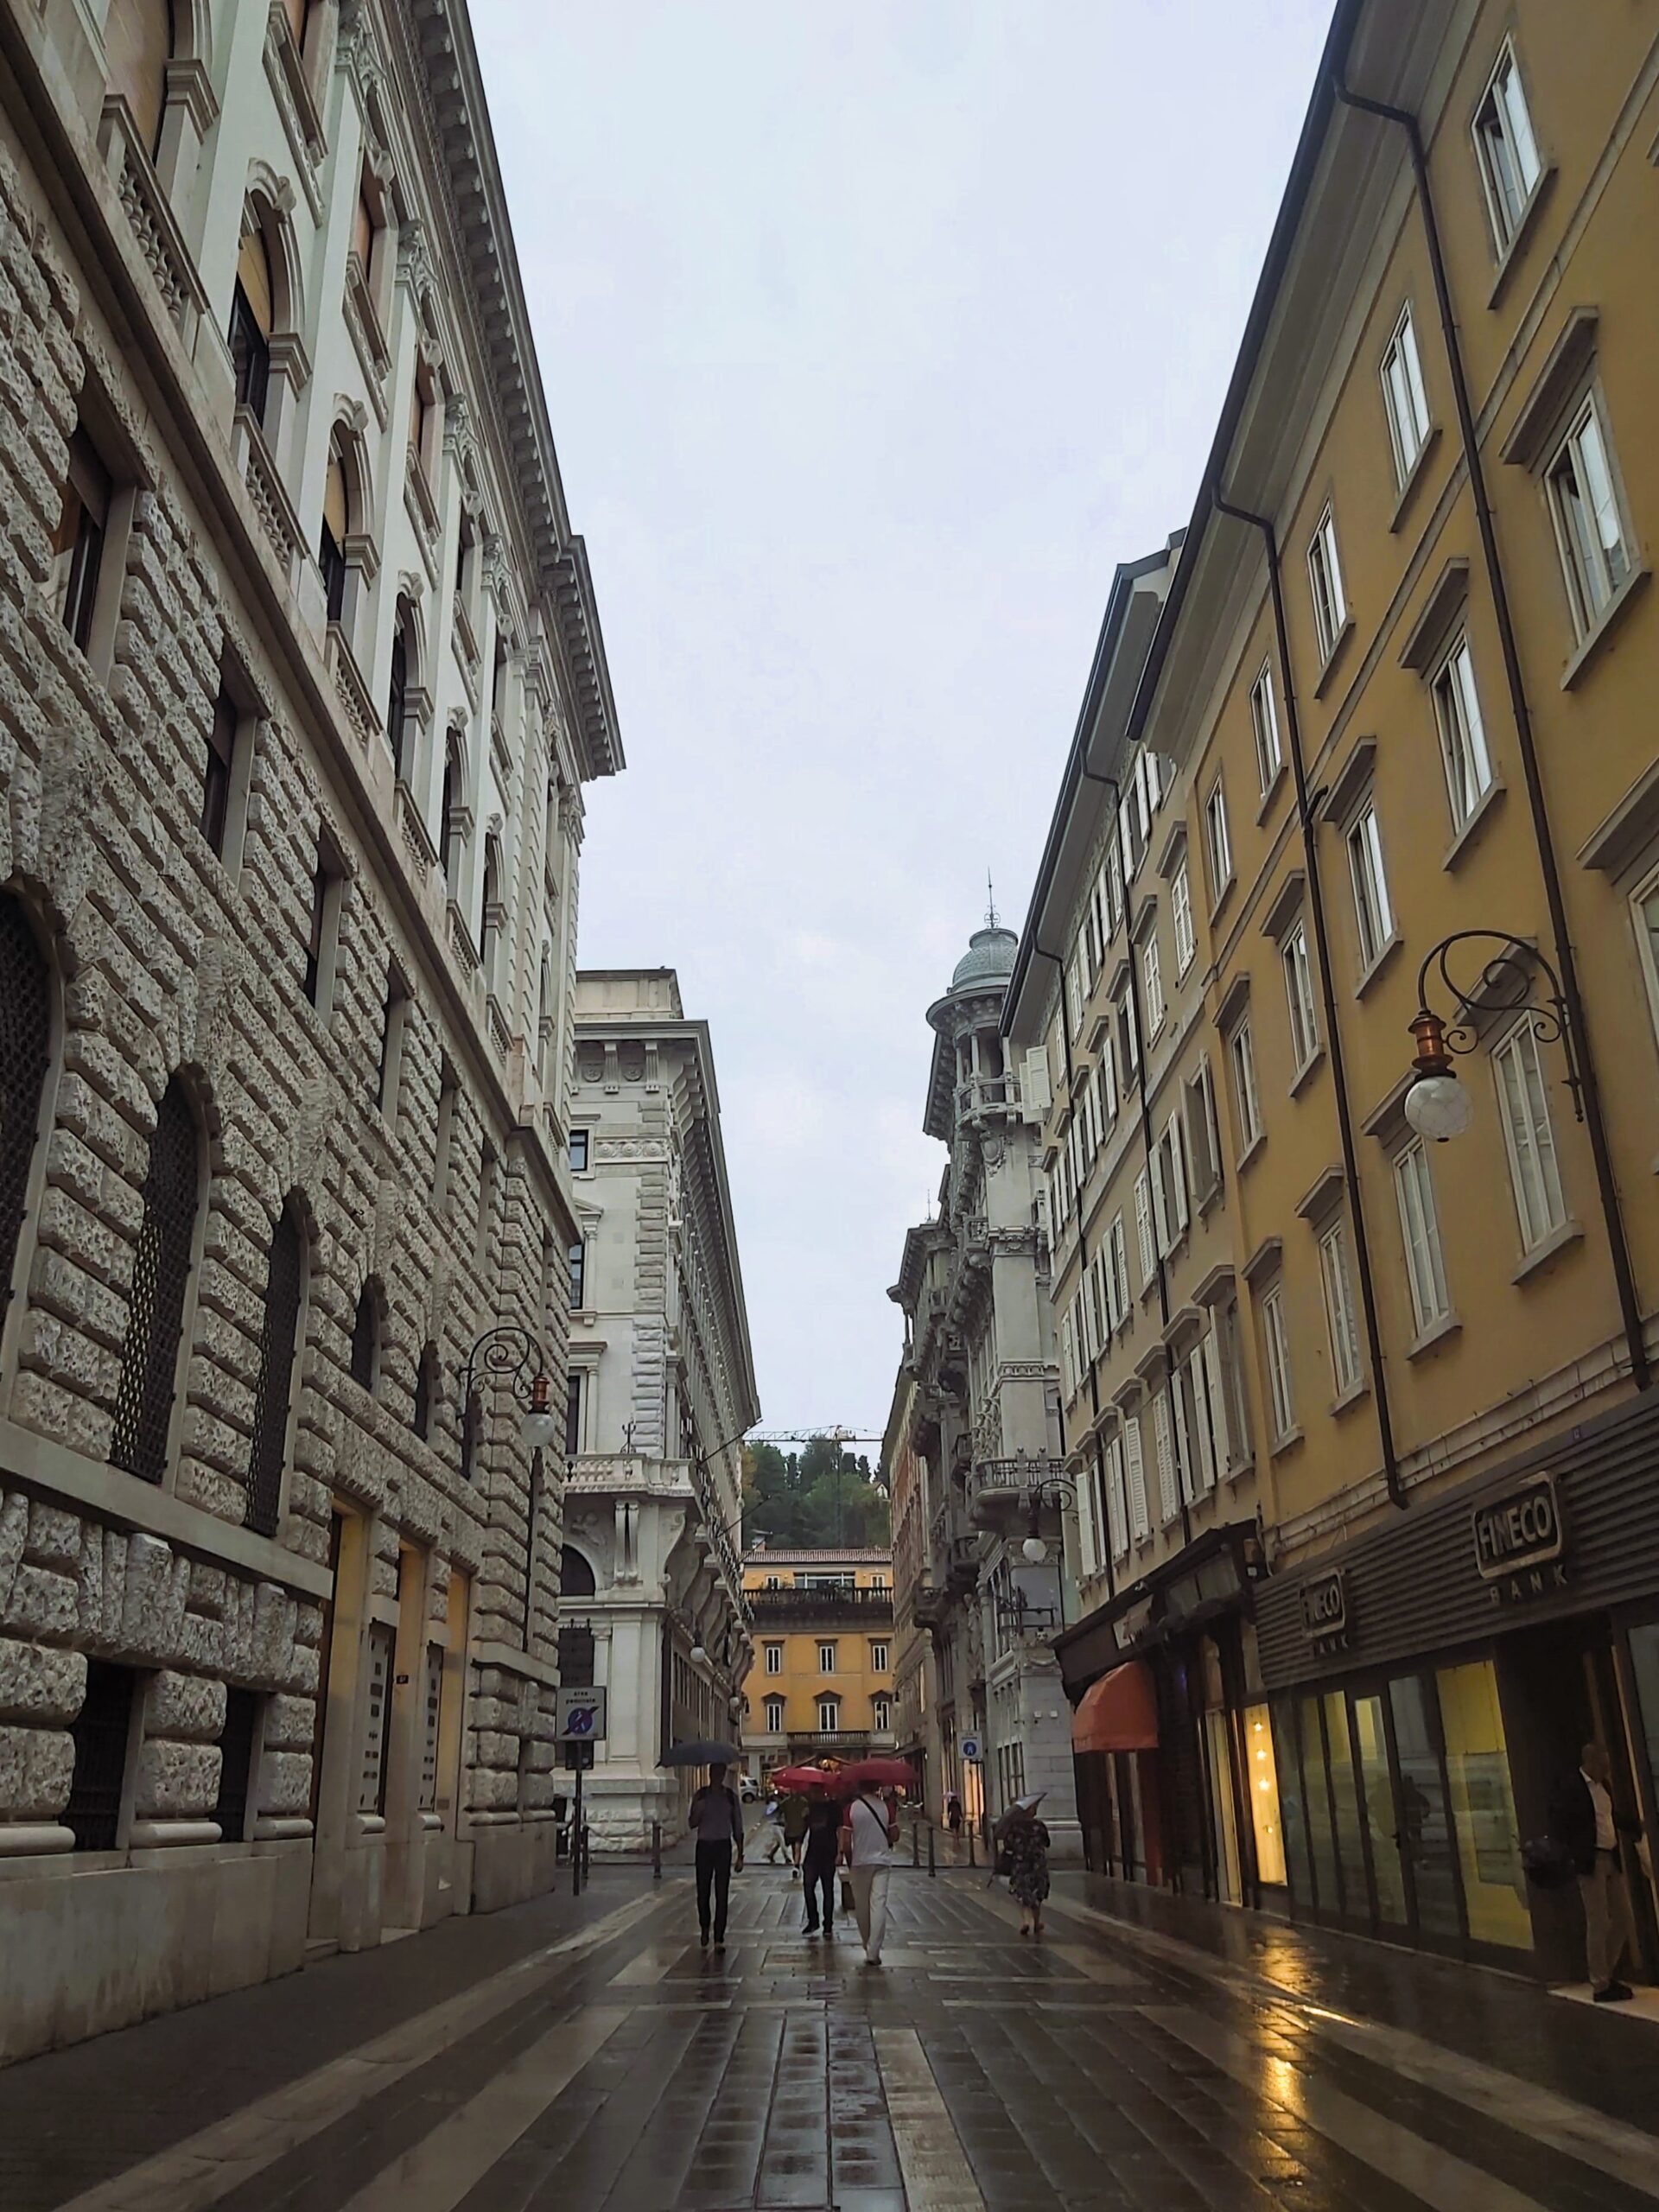 A rainy street scene in Trieste, Italy